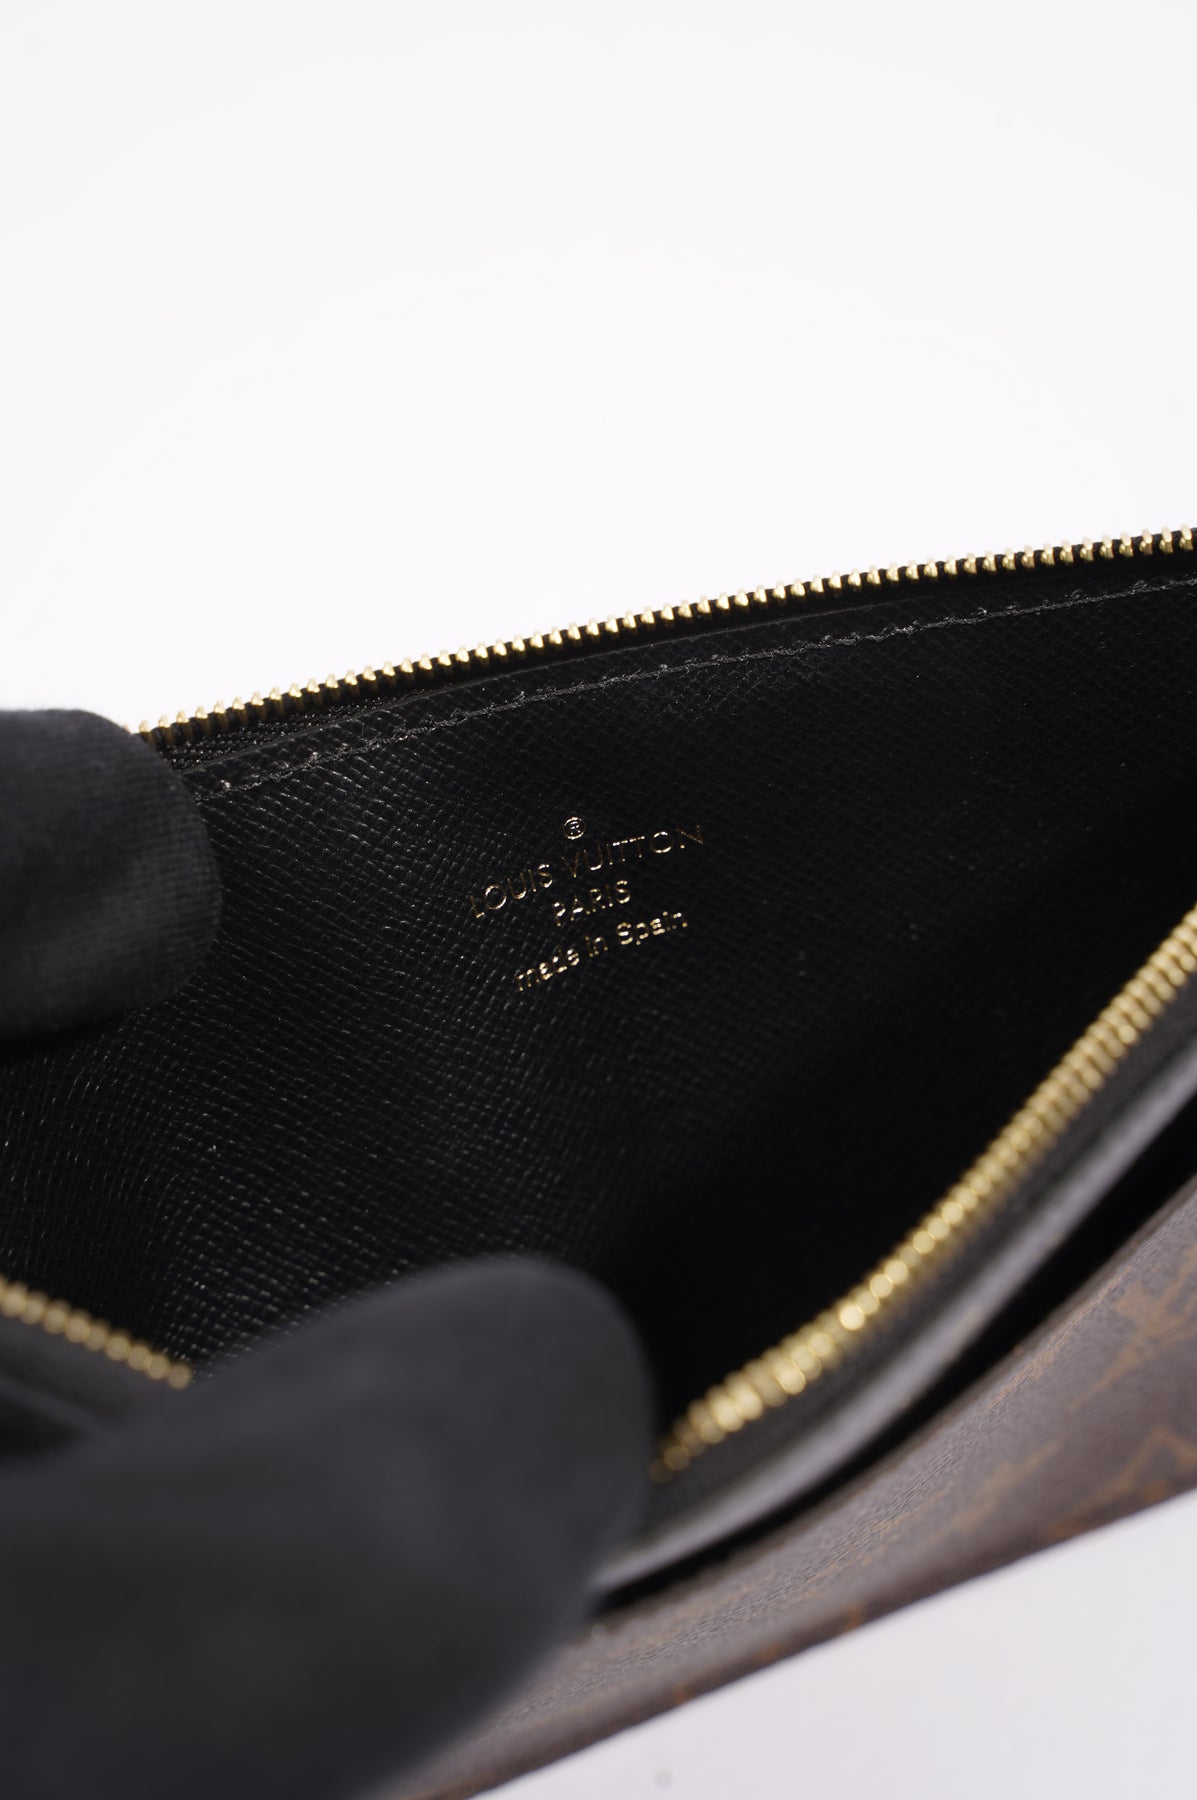 Louis Vuitton Monogram Eclipse Discovery compact wallet M45417 FH0271 Black  x Gray Compact Wallet Louis Vuitton